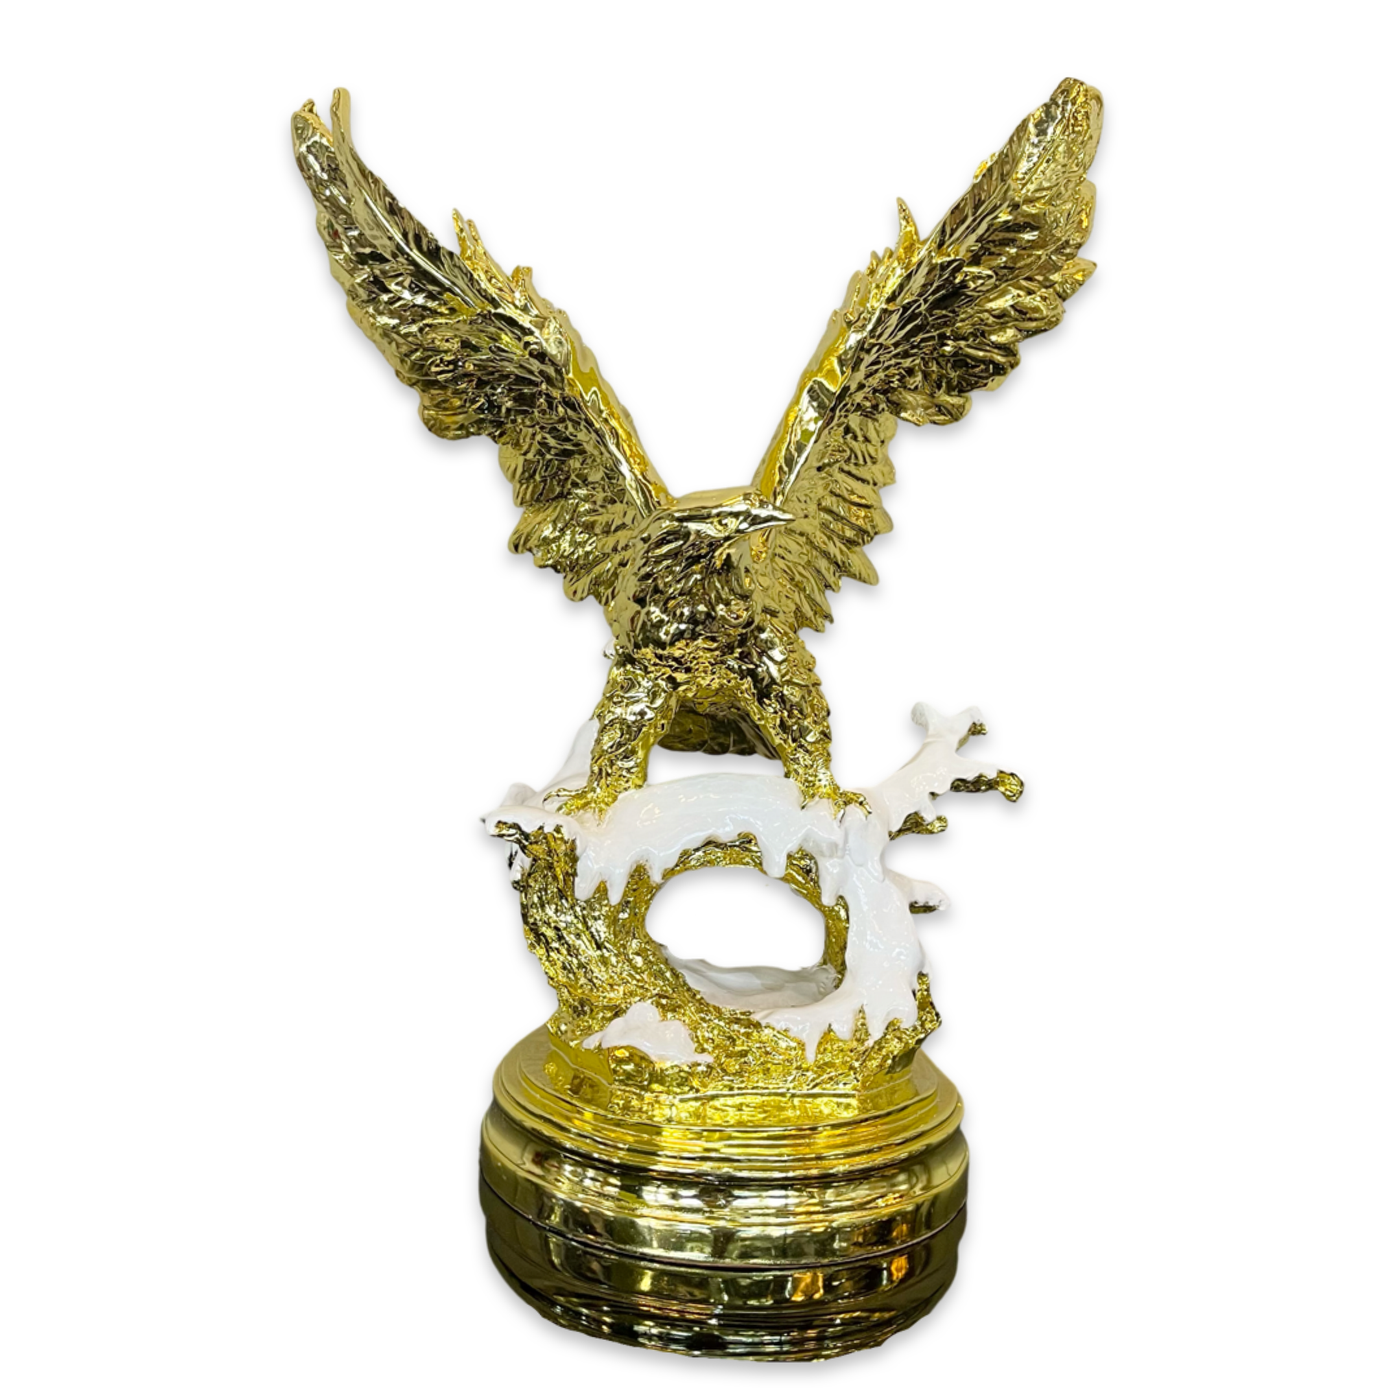 Golden Eagle sculpture